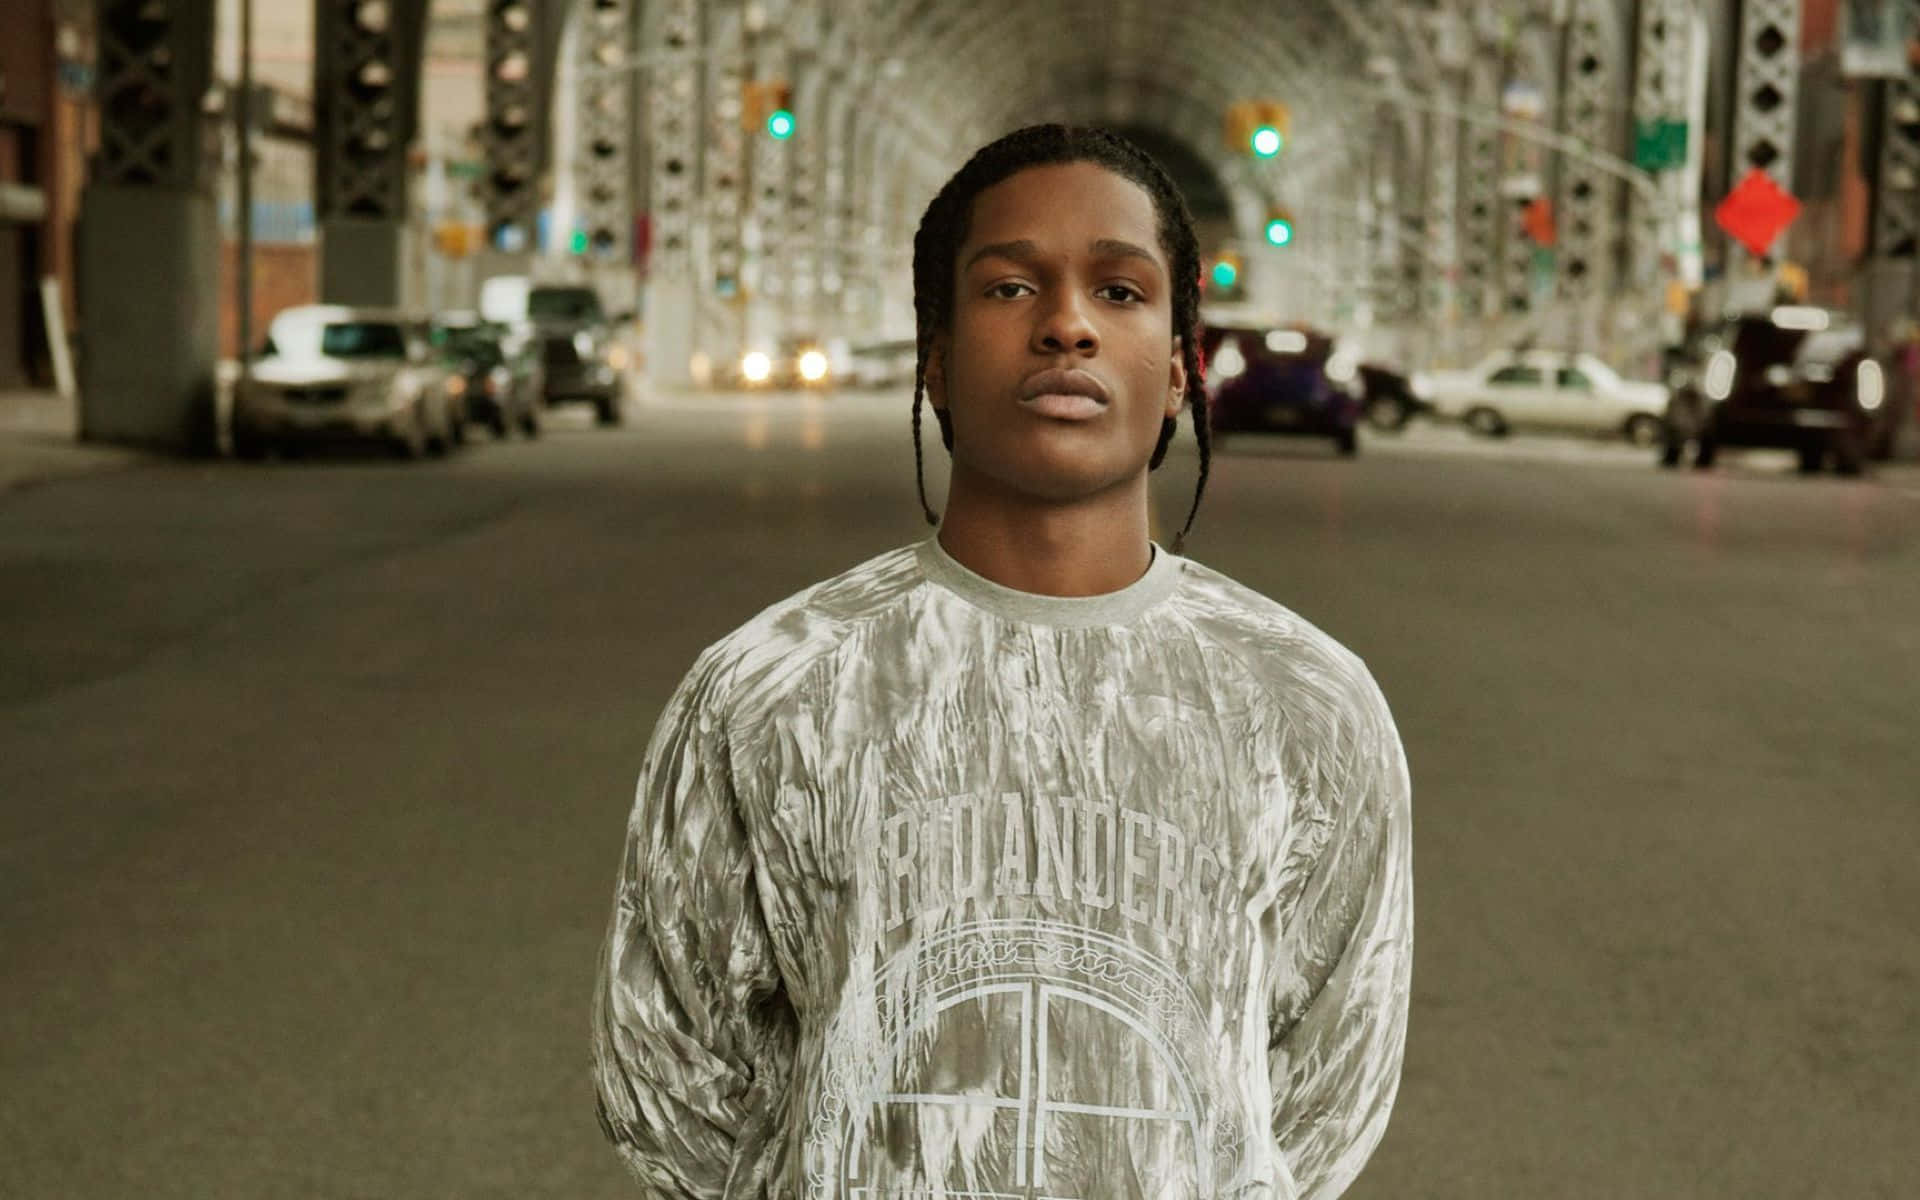 Global Hiphop Artist ASAP Rocky